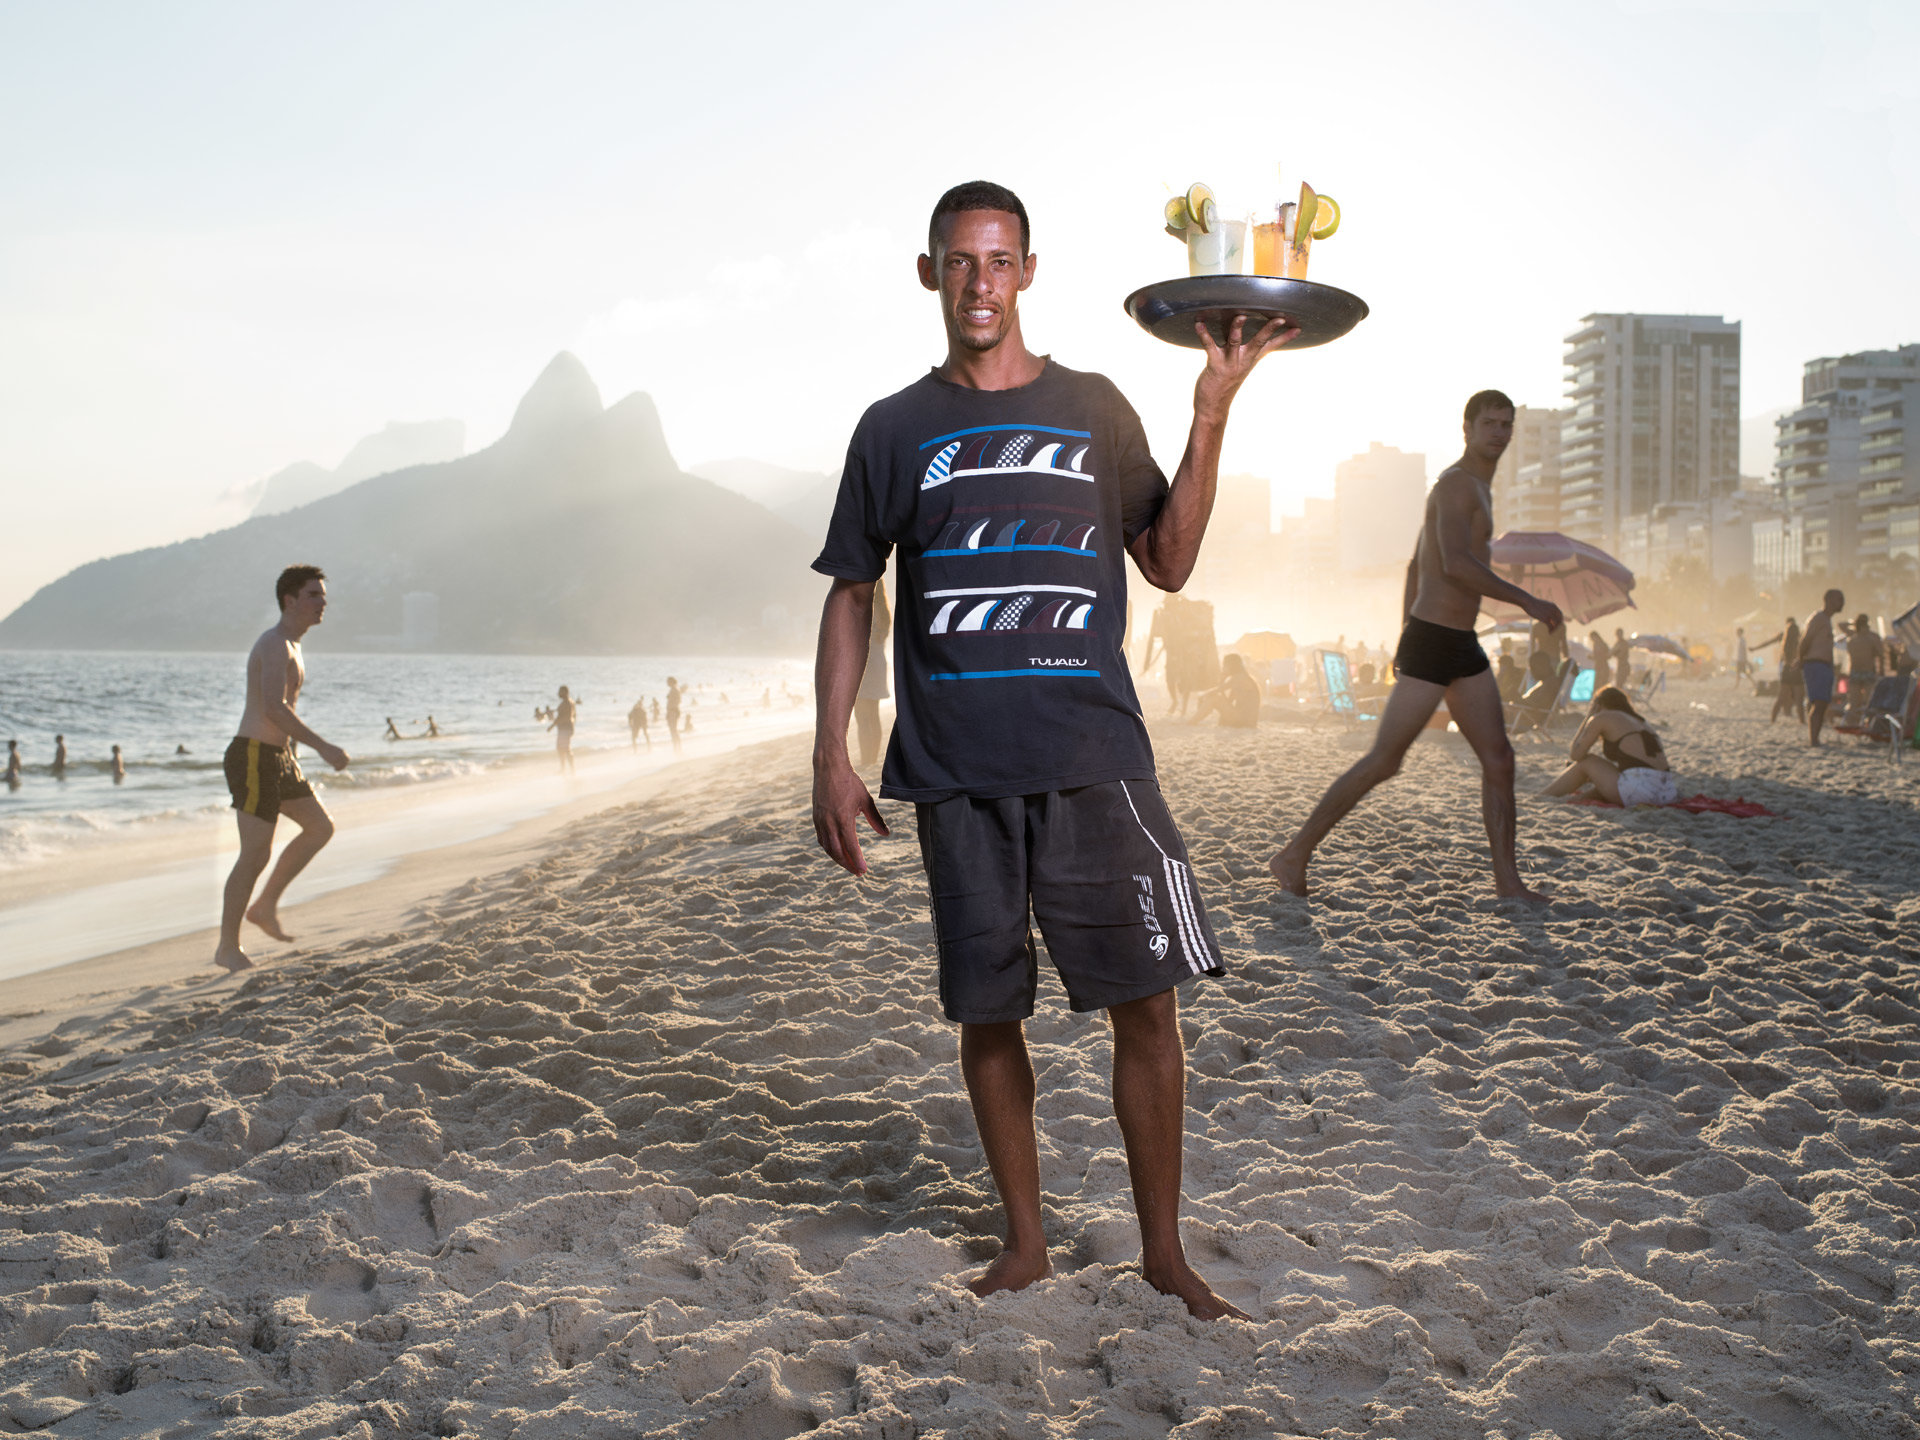 Silberth Ferrera am Strand von Rio 